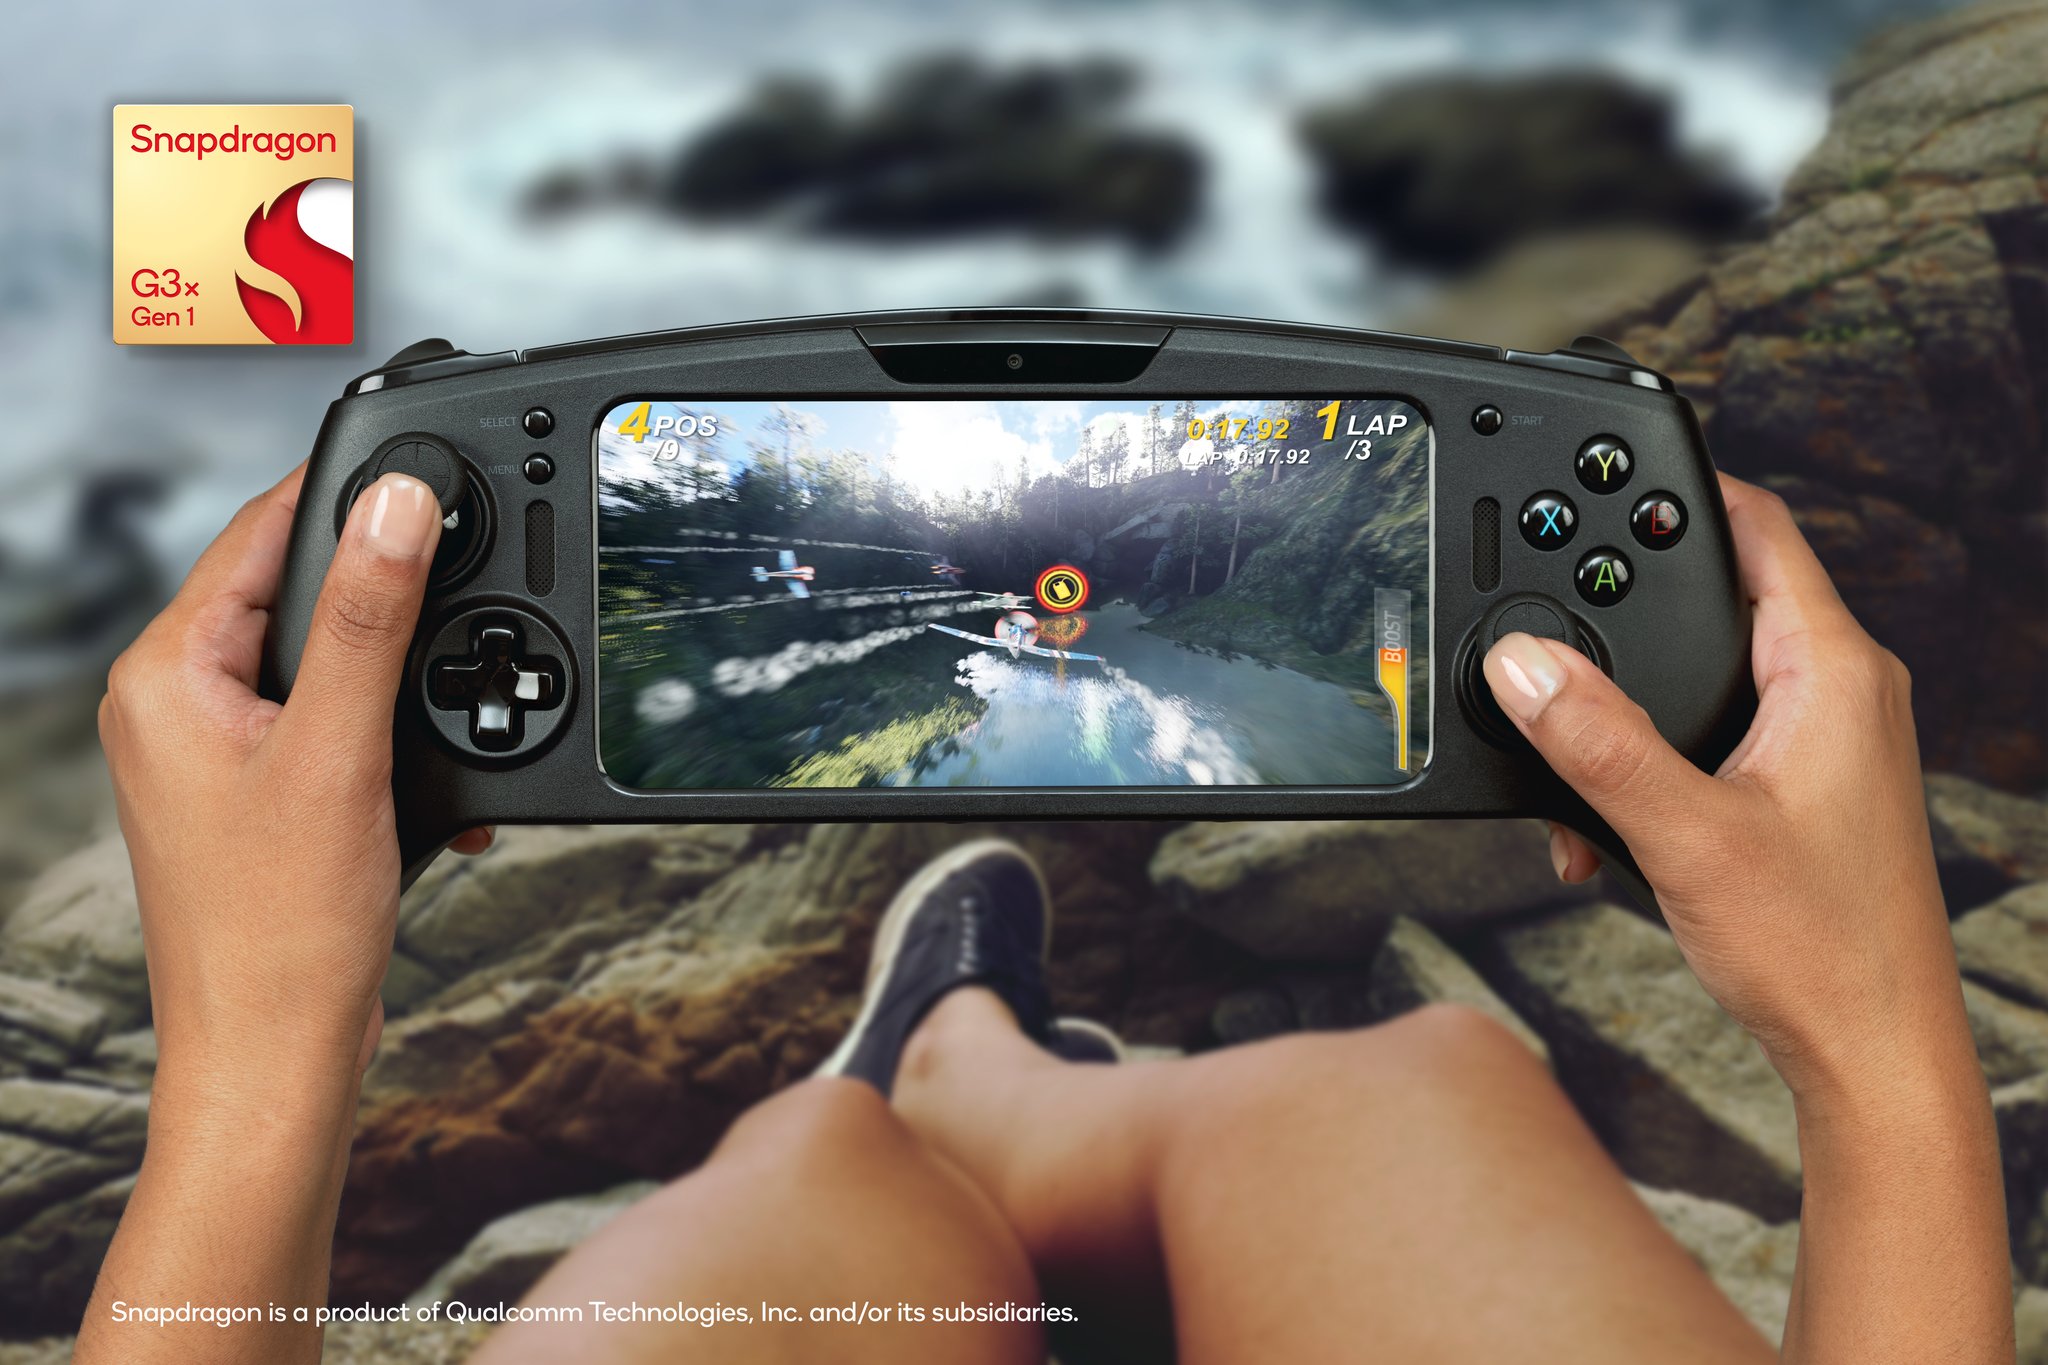 Snapdragon G3x Gen 1 Handheld Gaming Lifestyle